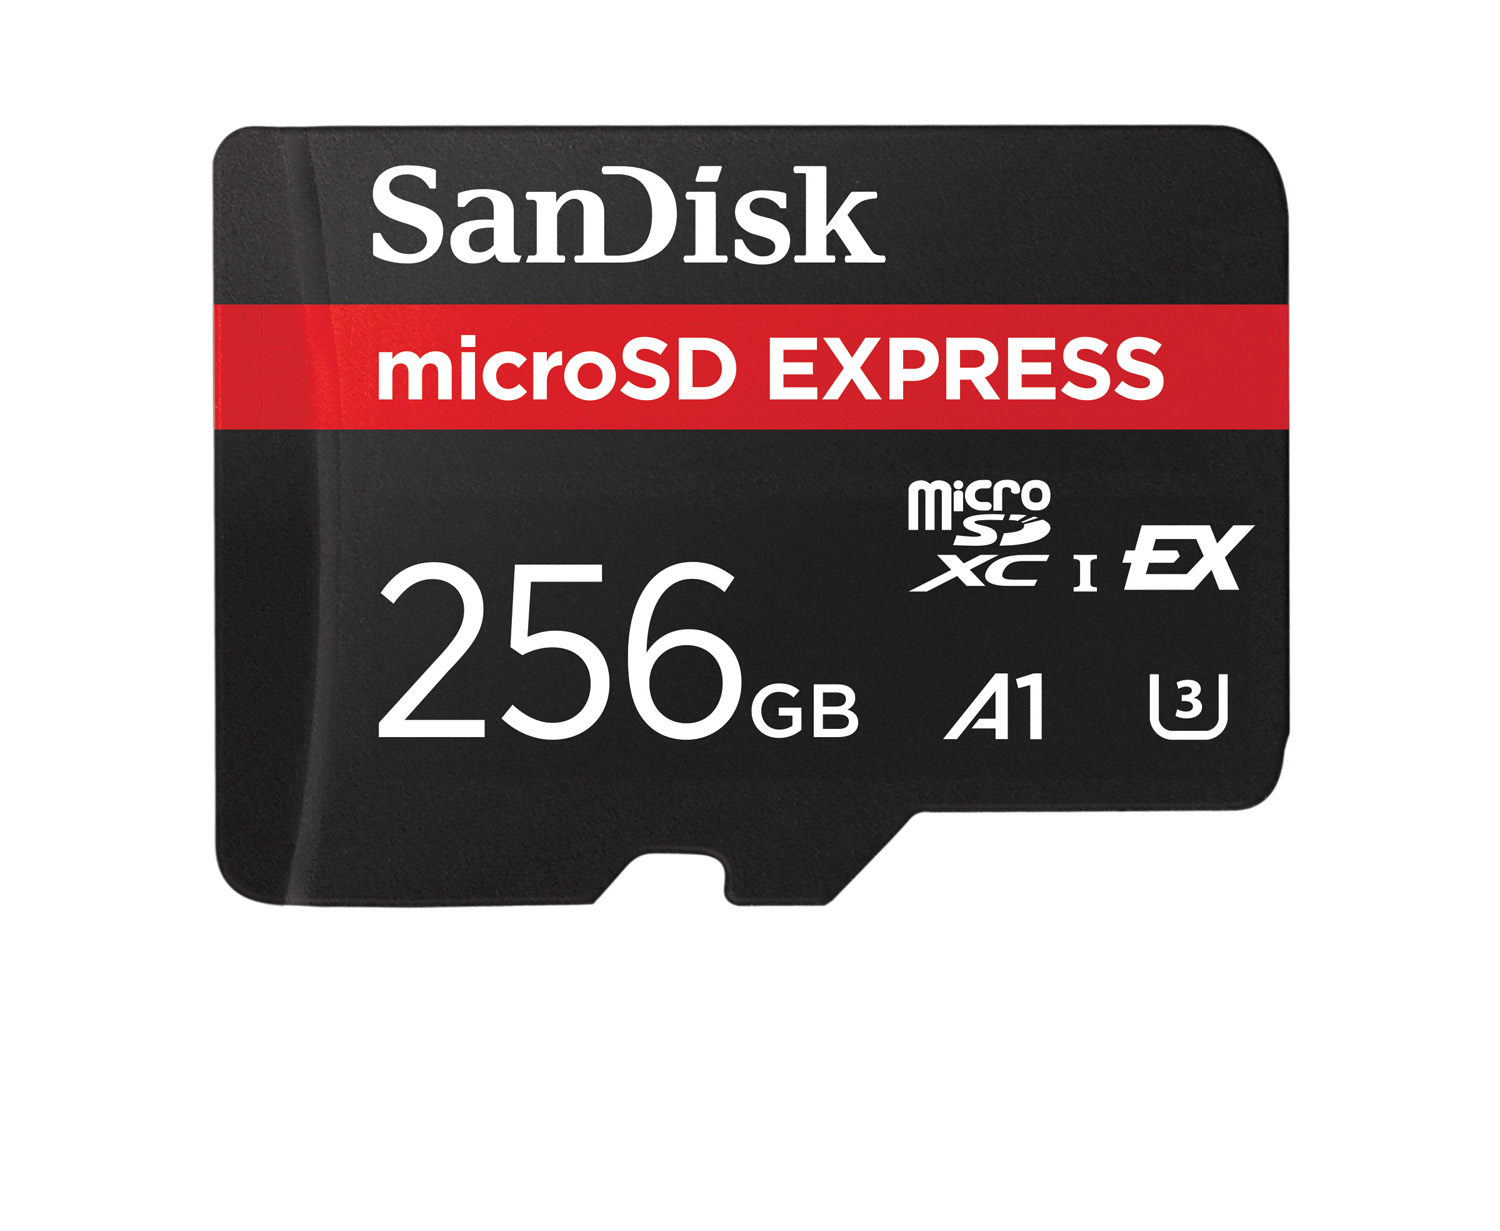 256GB SanDisk microSDXC UHS-I | Image © Western Digital